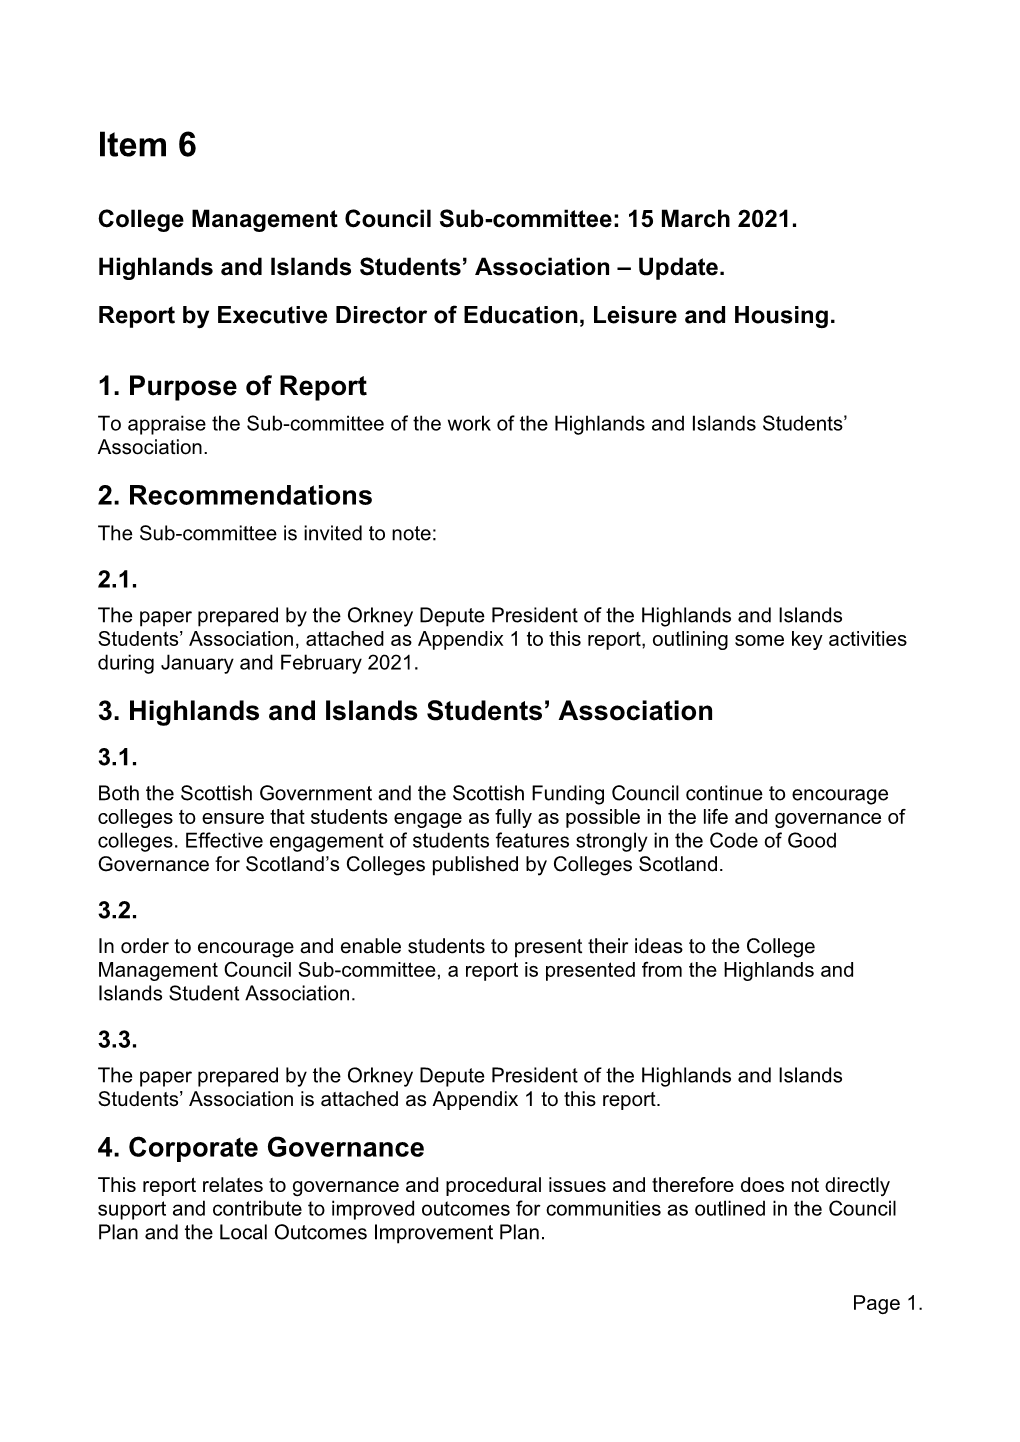 Highlands and Islands Students' Association